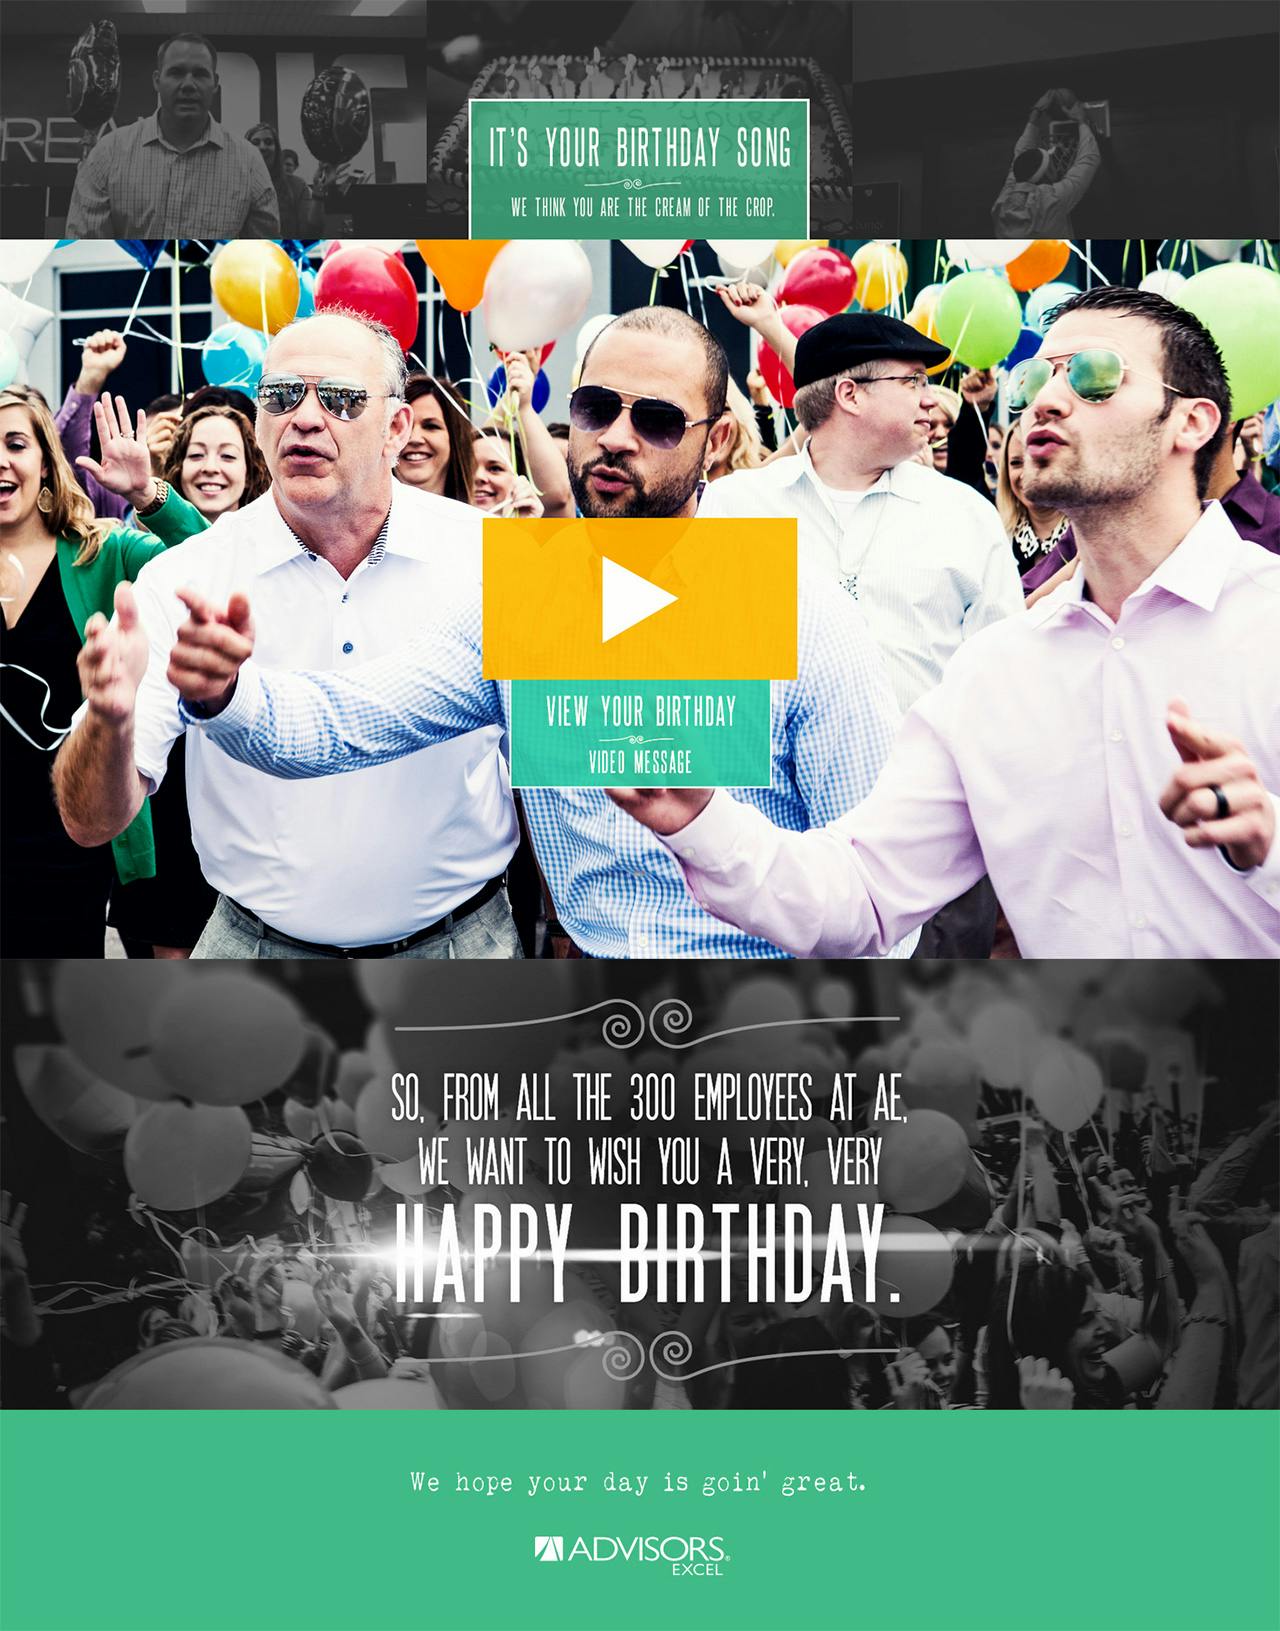 Advisors Excel “It’s Your Birthday Song” Website Screenshot